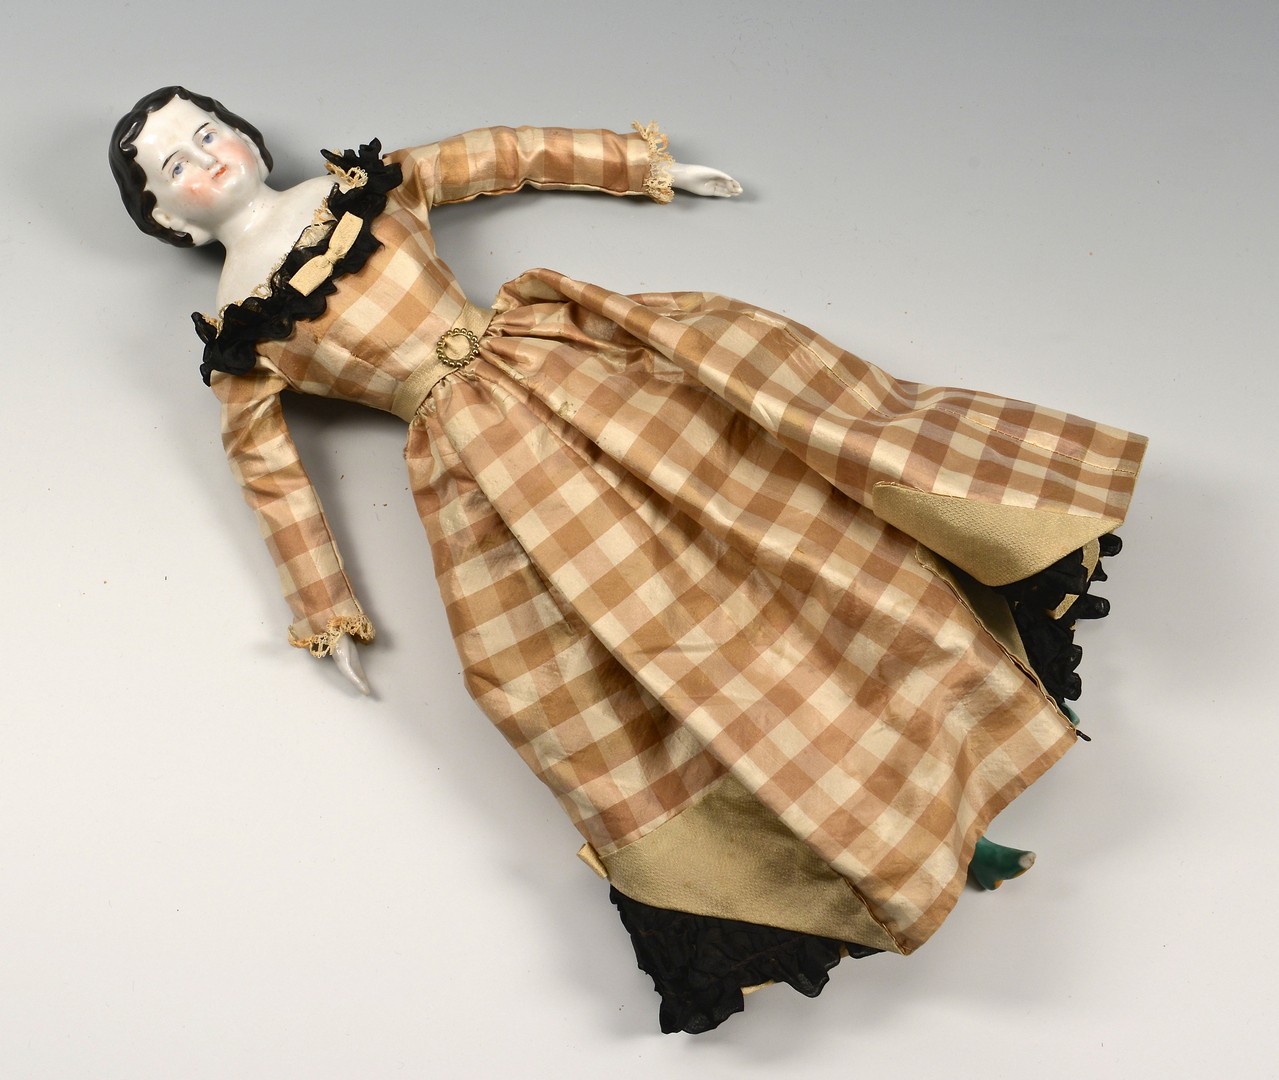 Lot 851: 19th Century Dolls: 1 porcelain, 2 wood